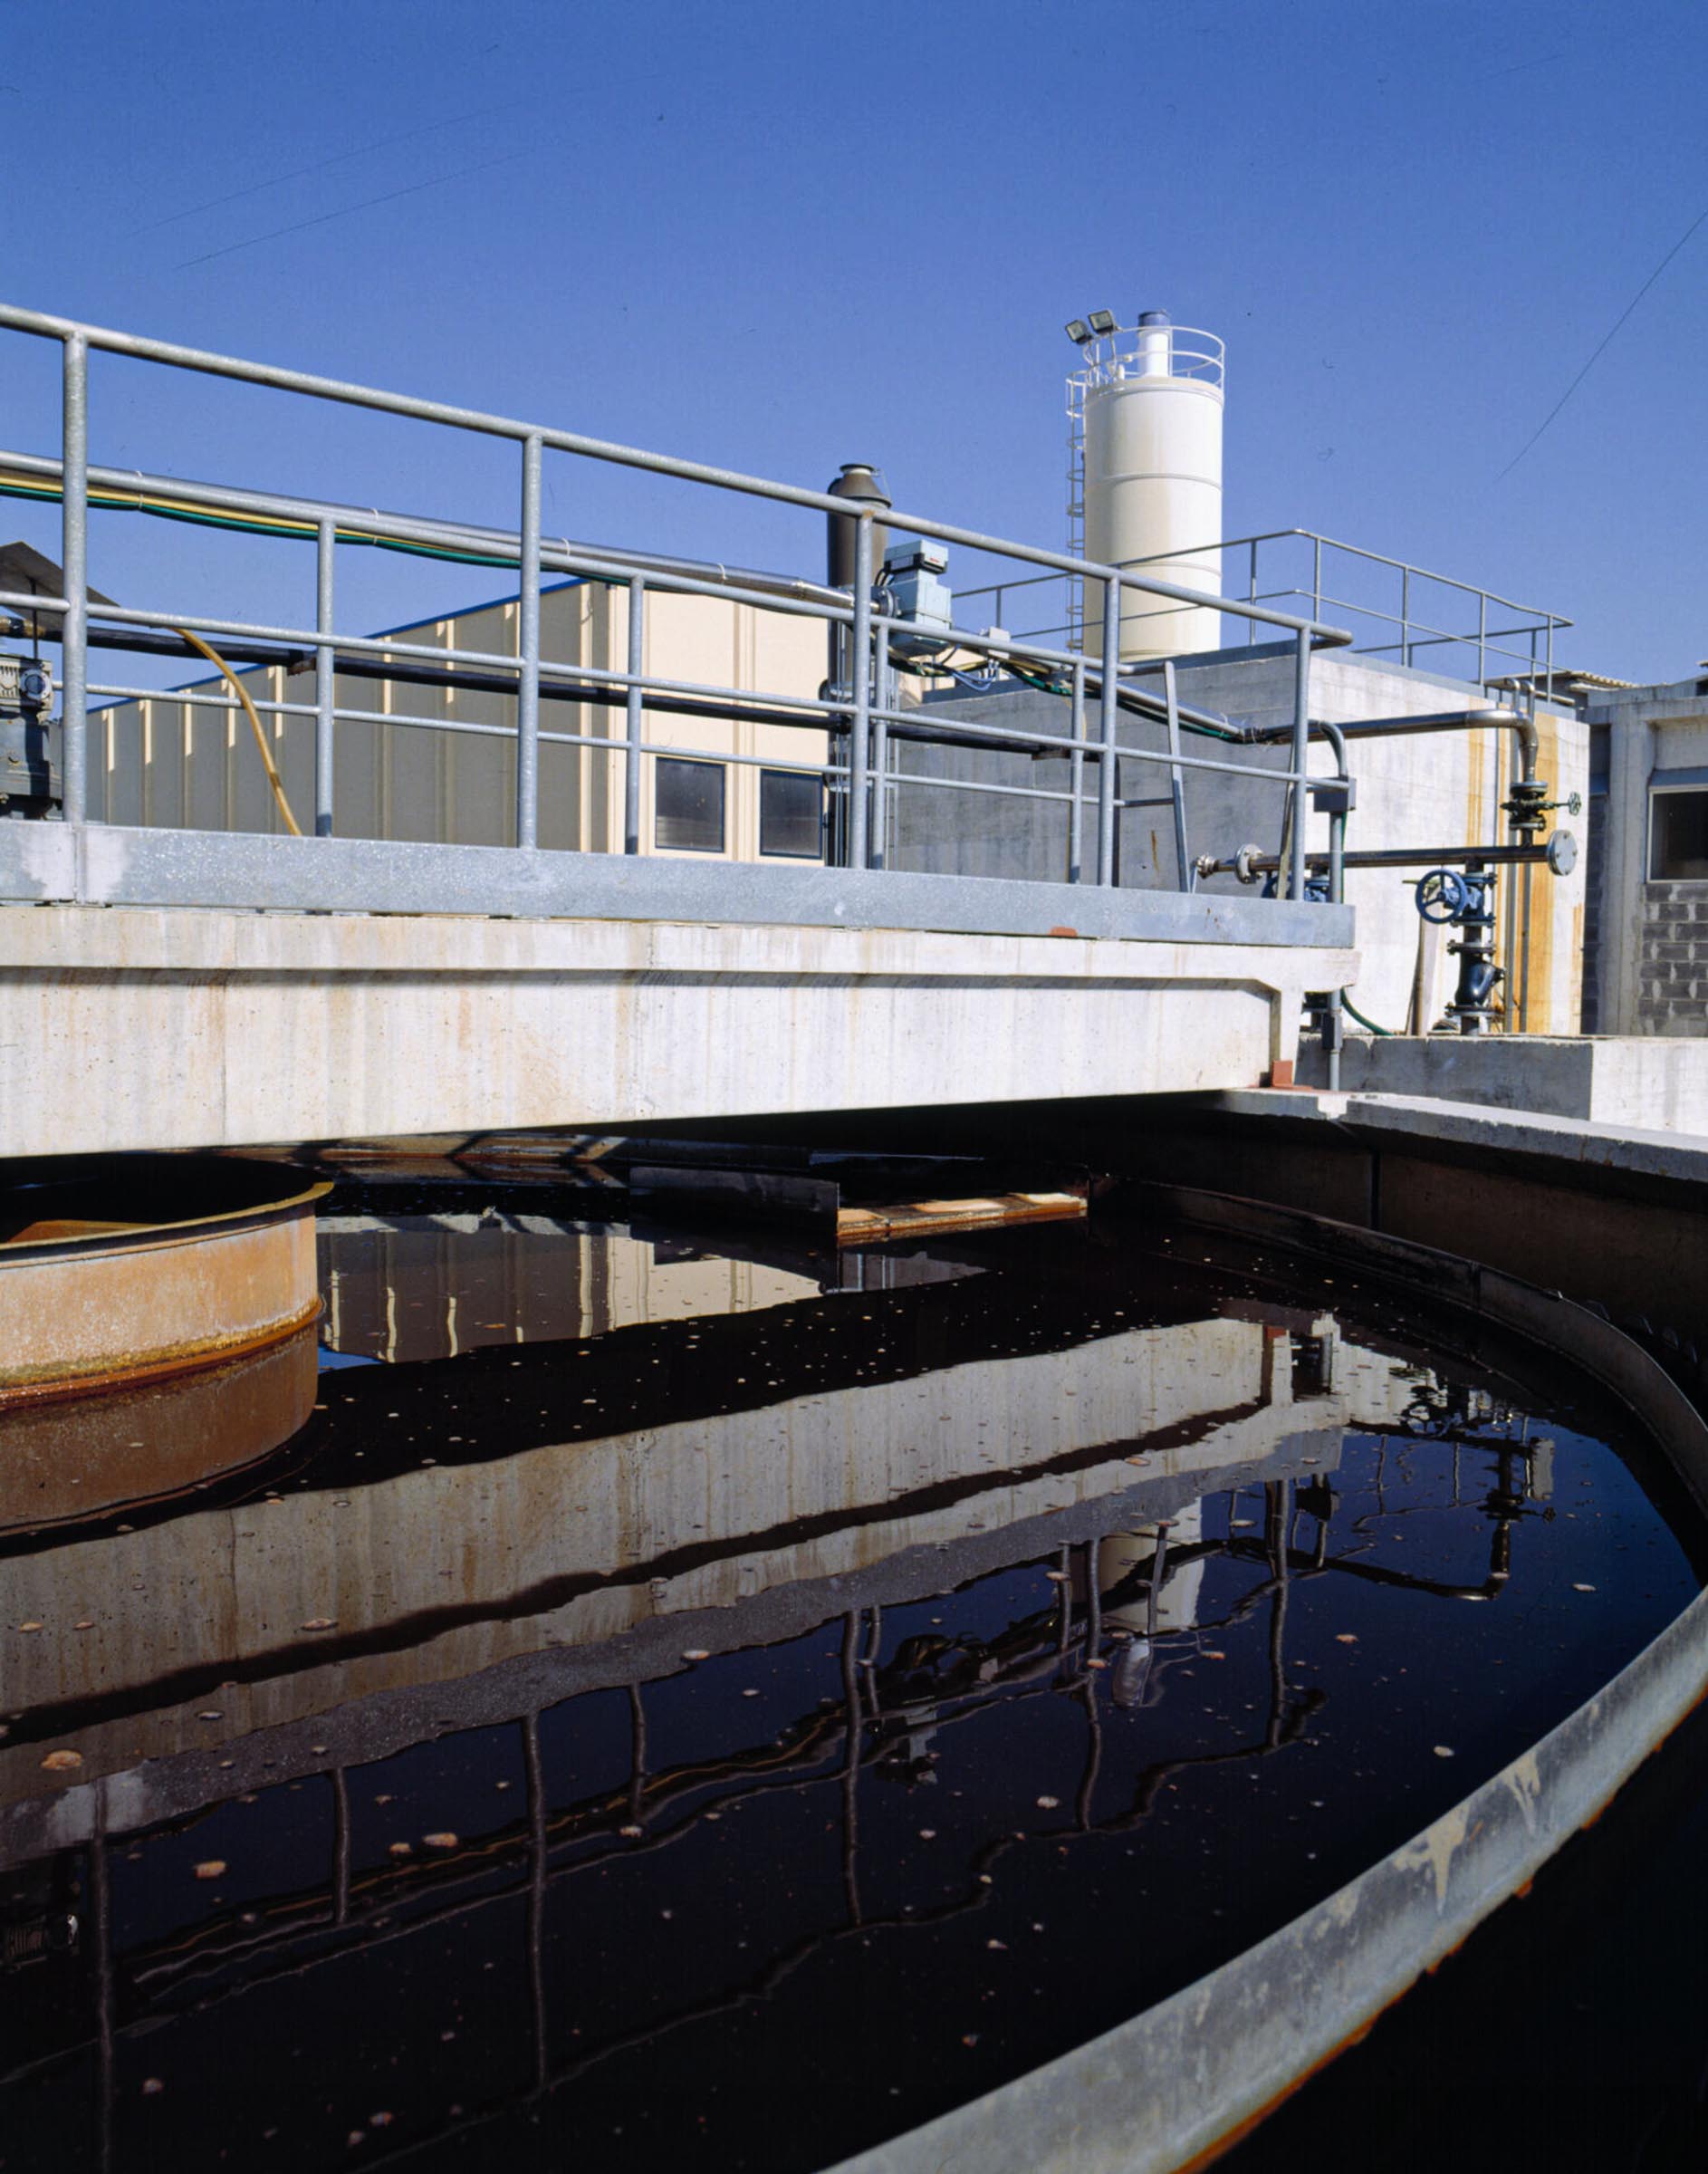 A water purification basin at the Pettinatura di Verrone facility.